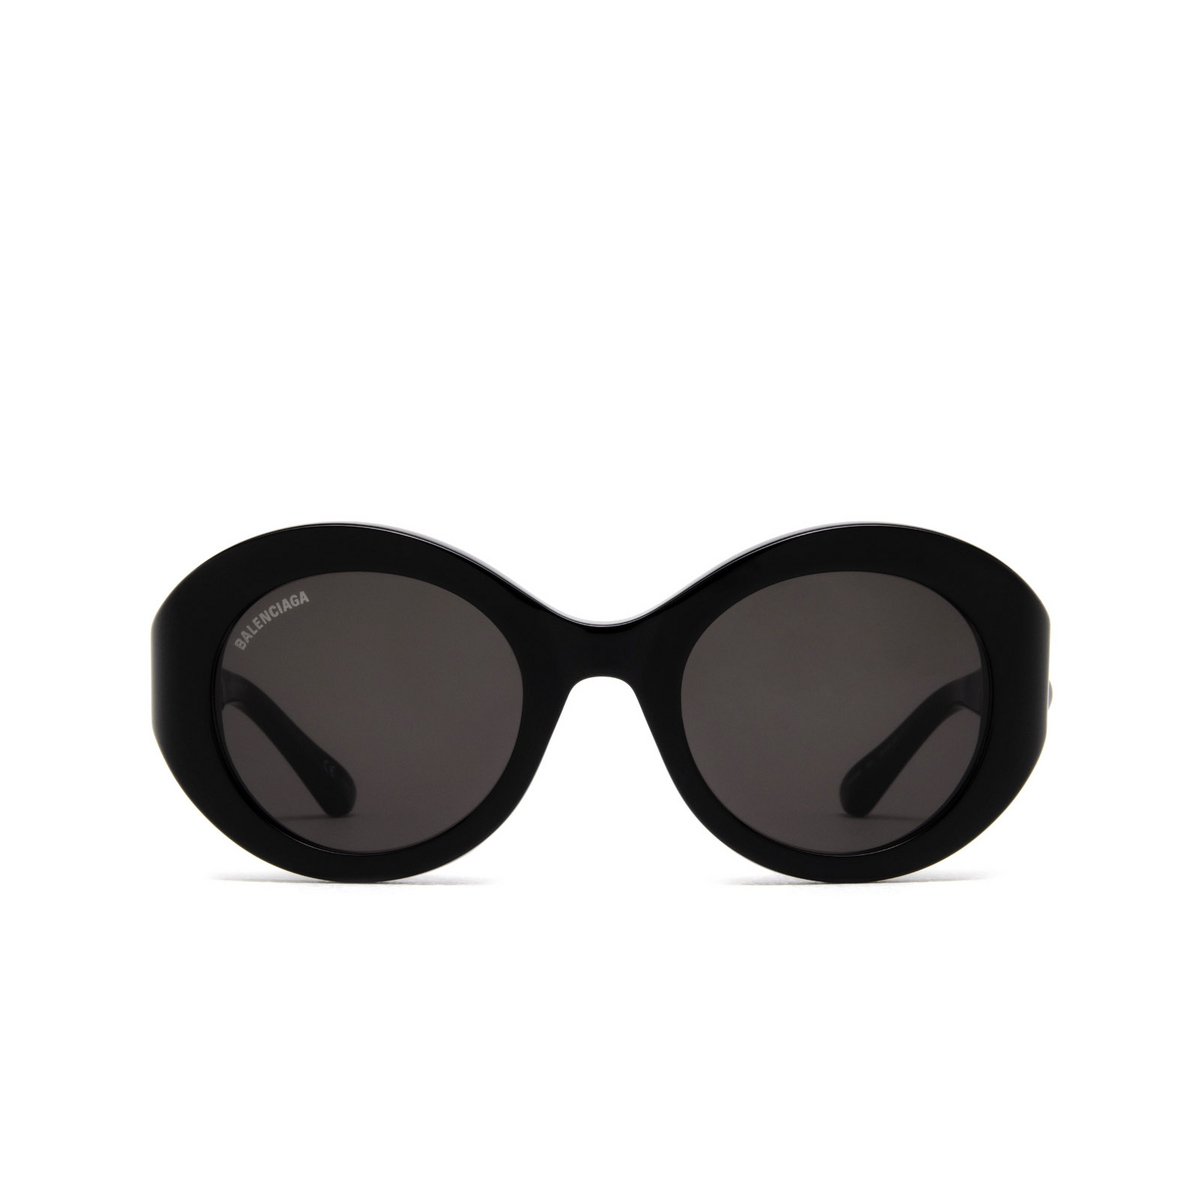 Balenciaga Twist Sunglasses 001 Black - front view